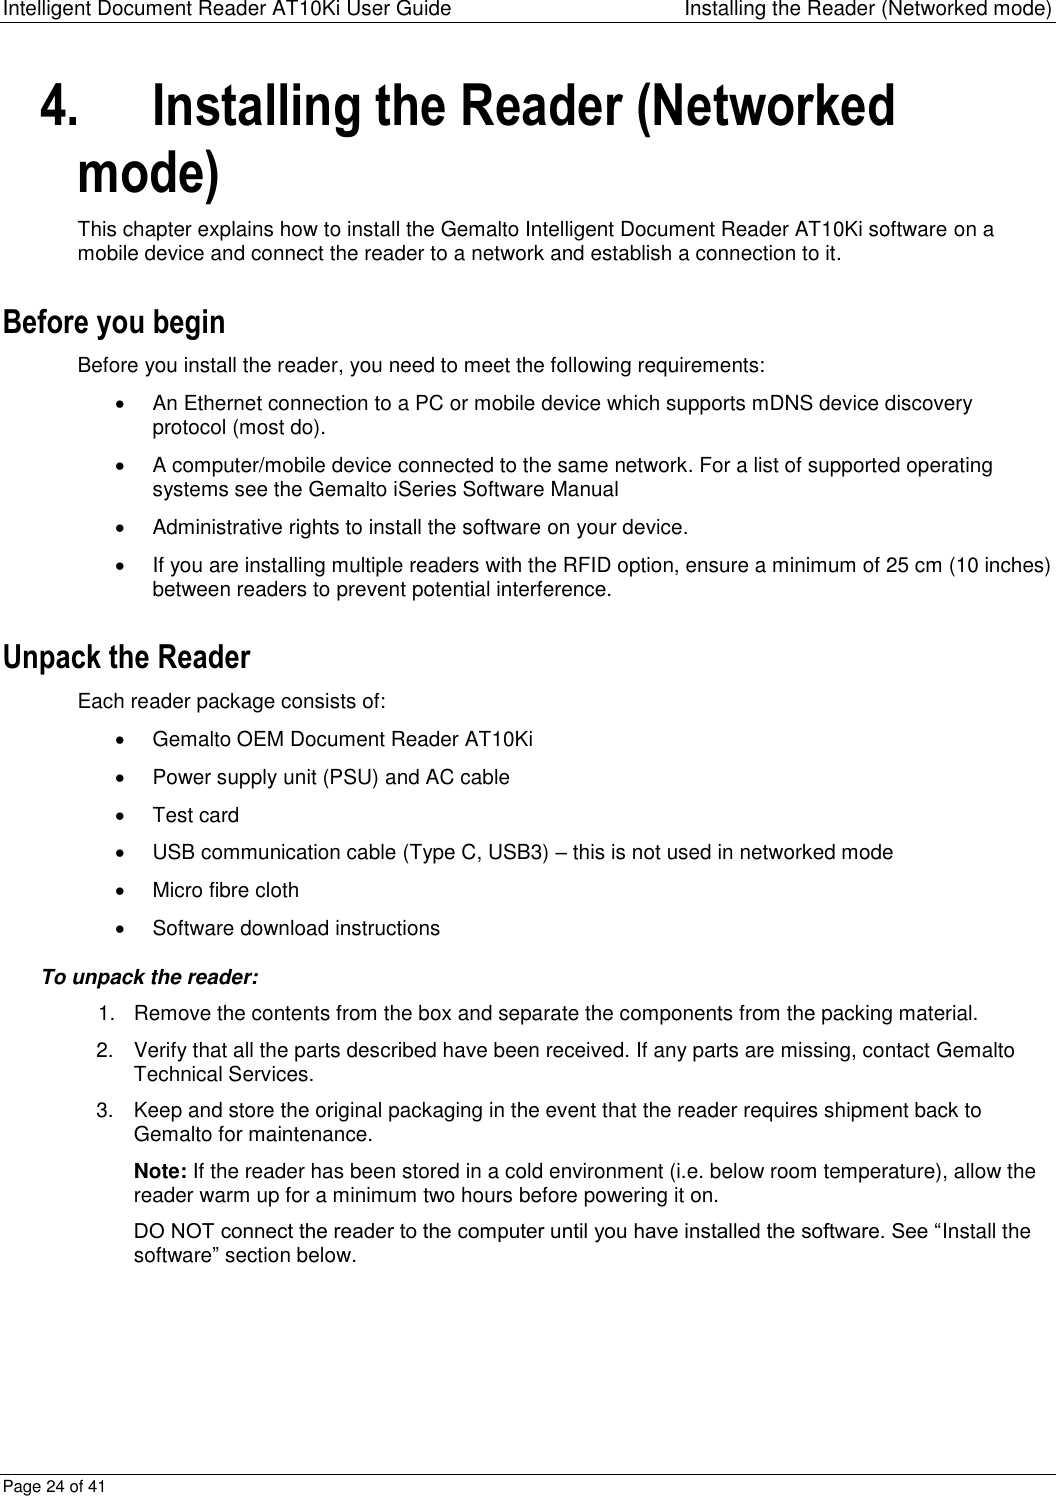 Page 24 of Gemalto PR01523 ation Scanner User Manual